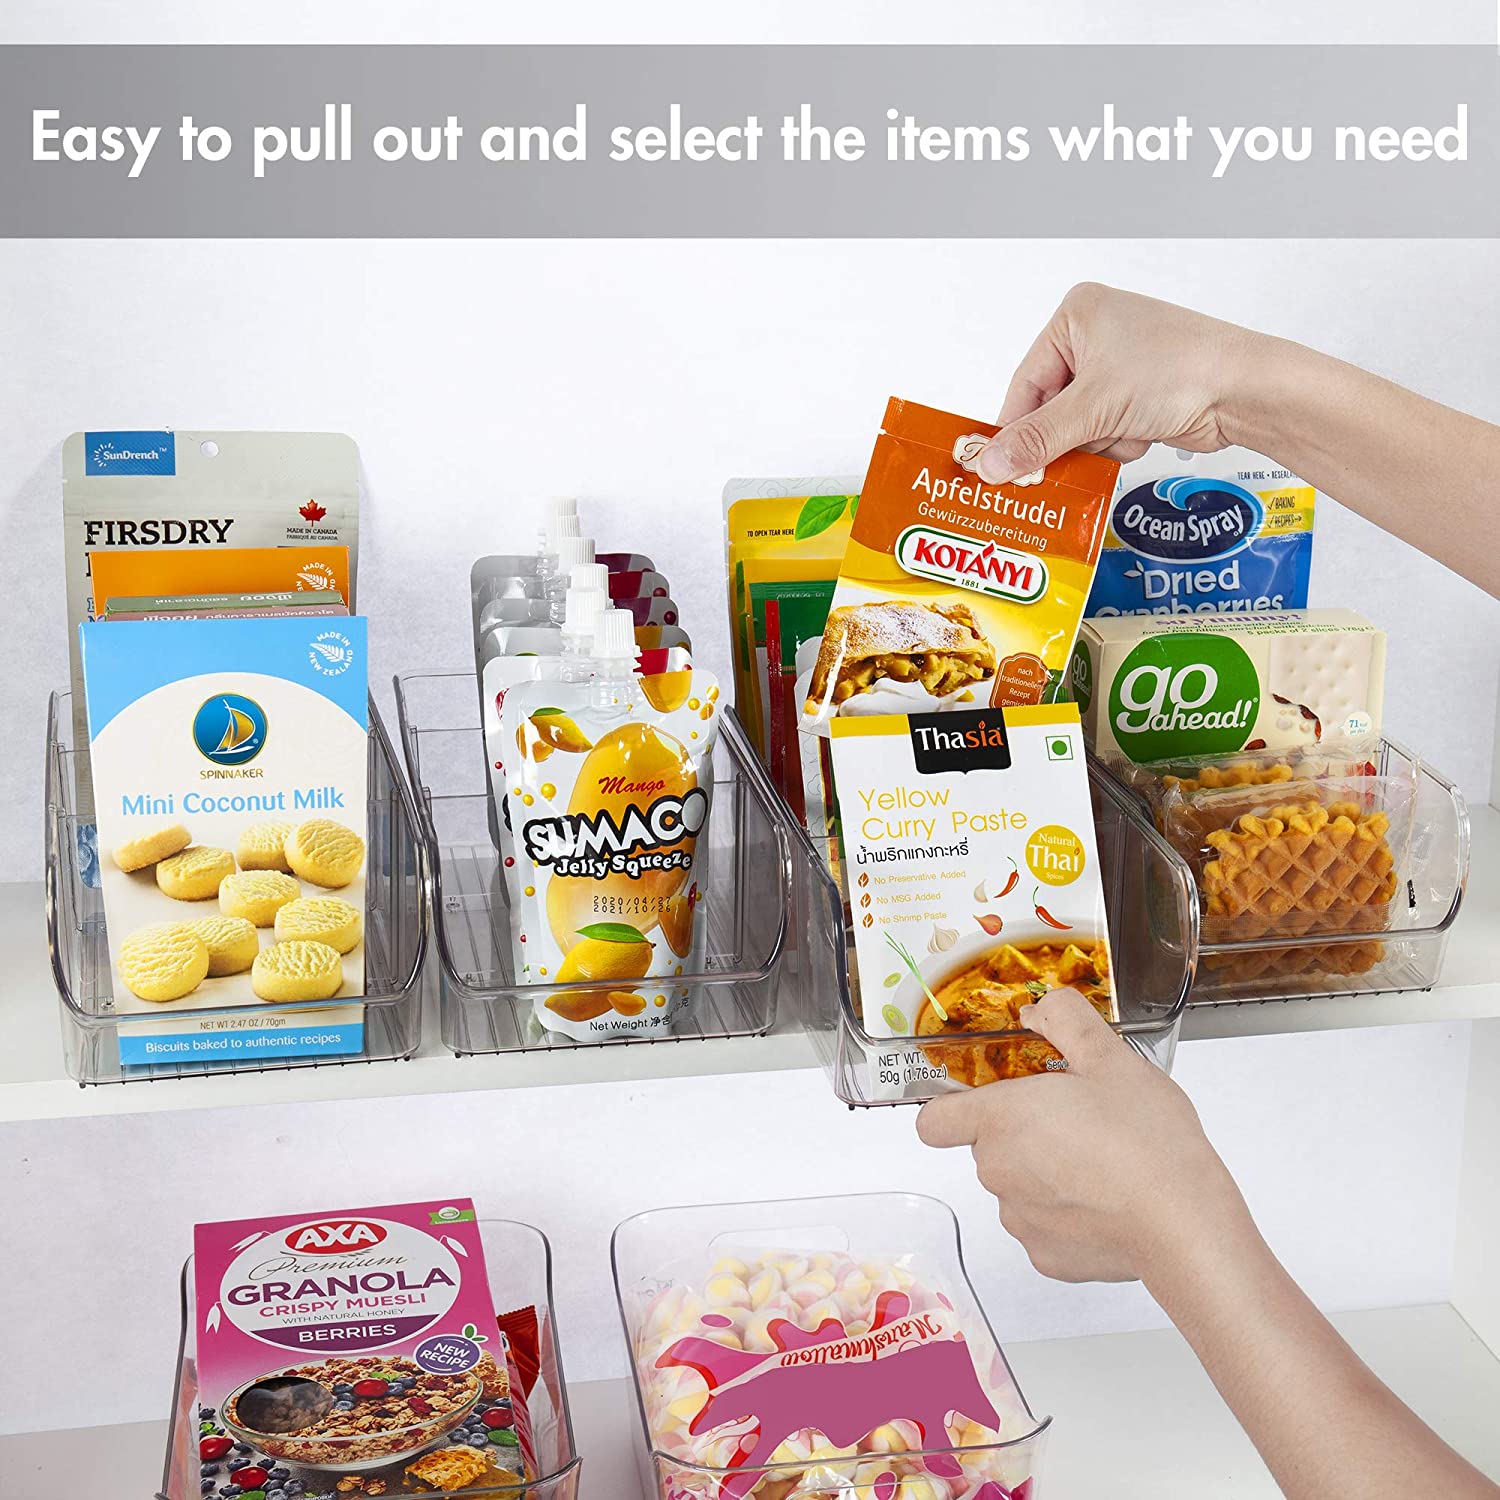 YIHONG Clear Pantry Storage Organizer Bins, 6 Pack Plastic Food